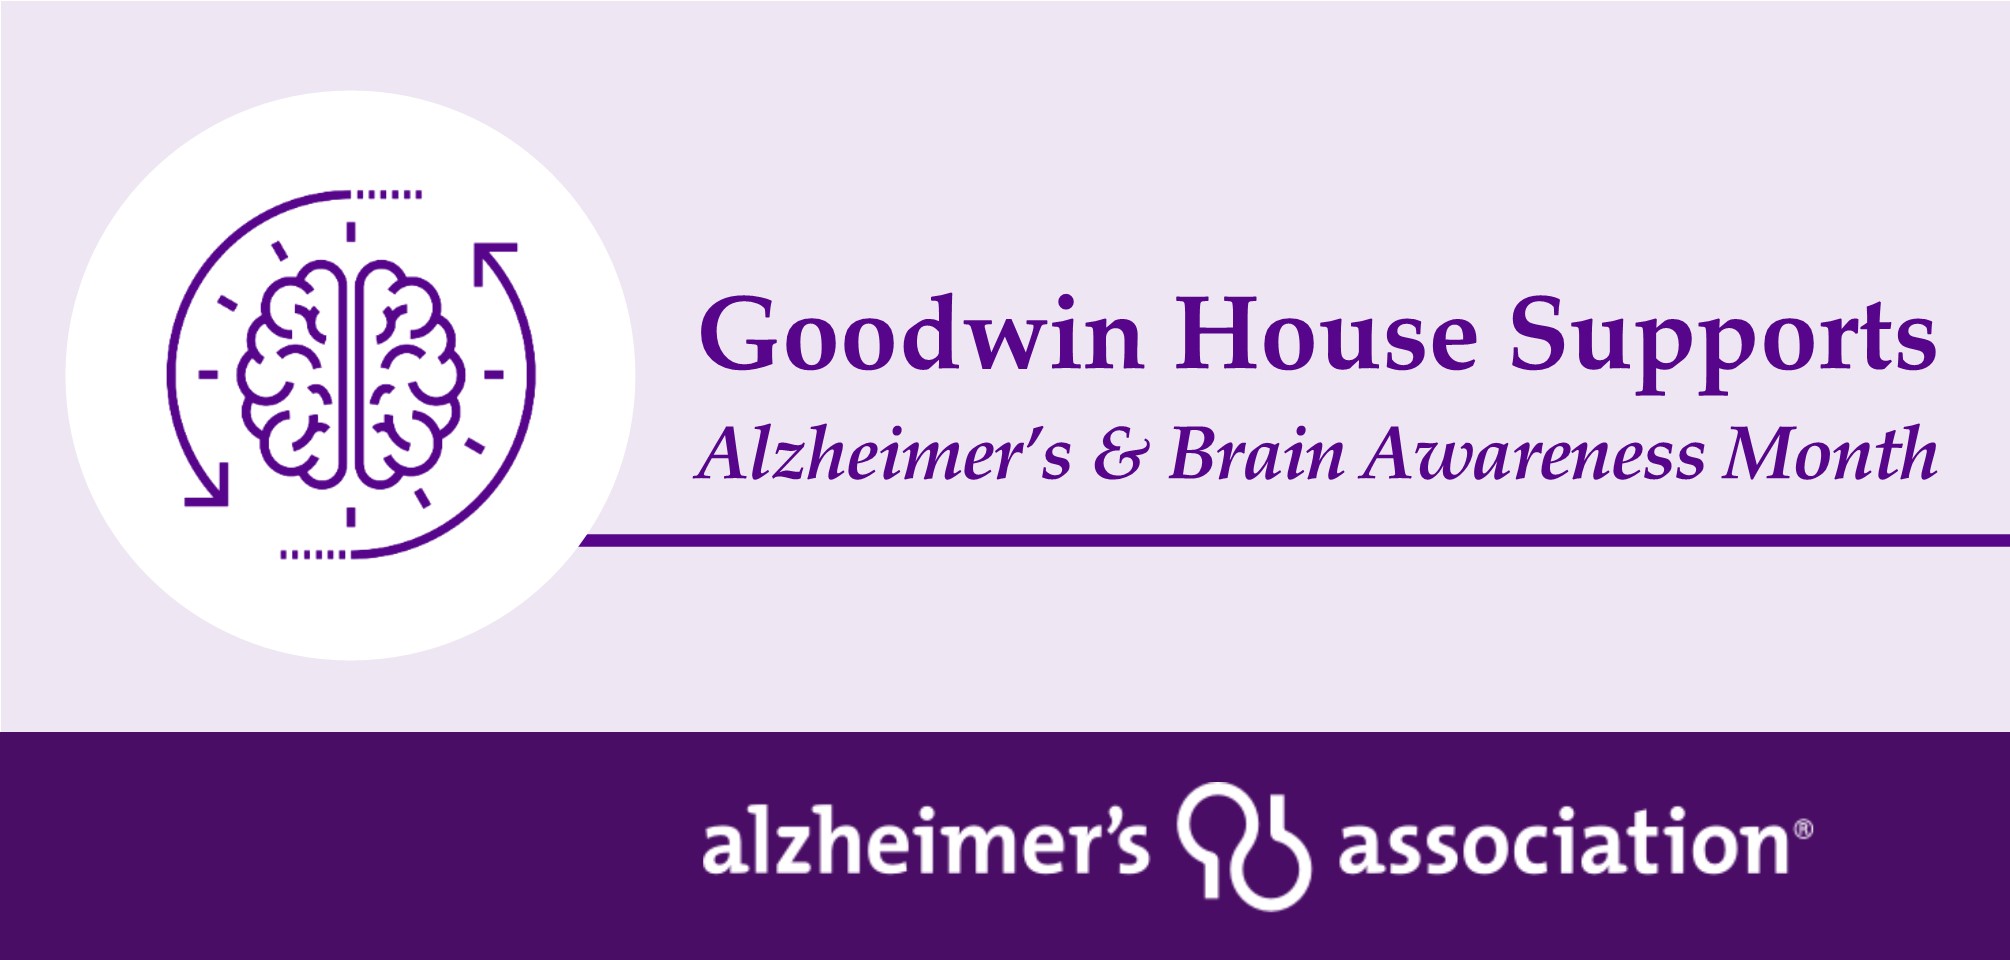 Goodwin Living supports Alzheimer's and Brain Awareness Month